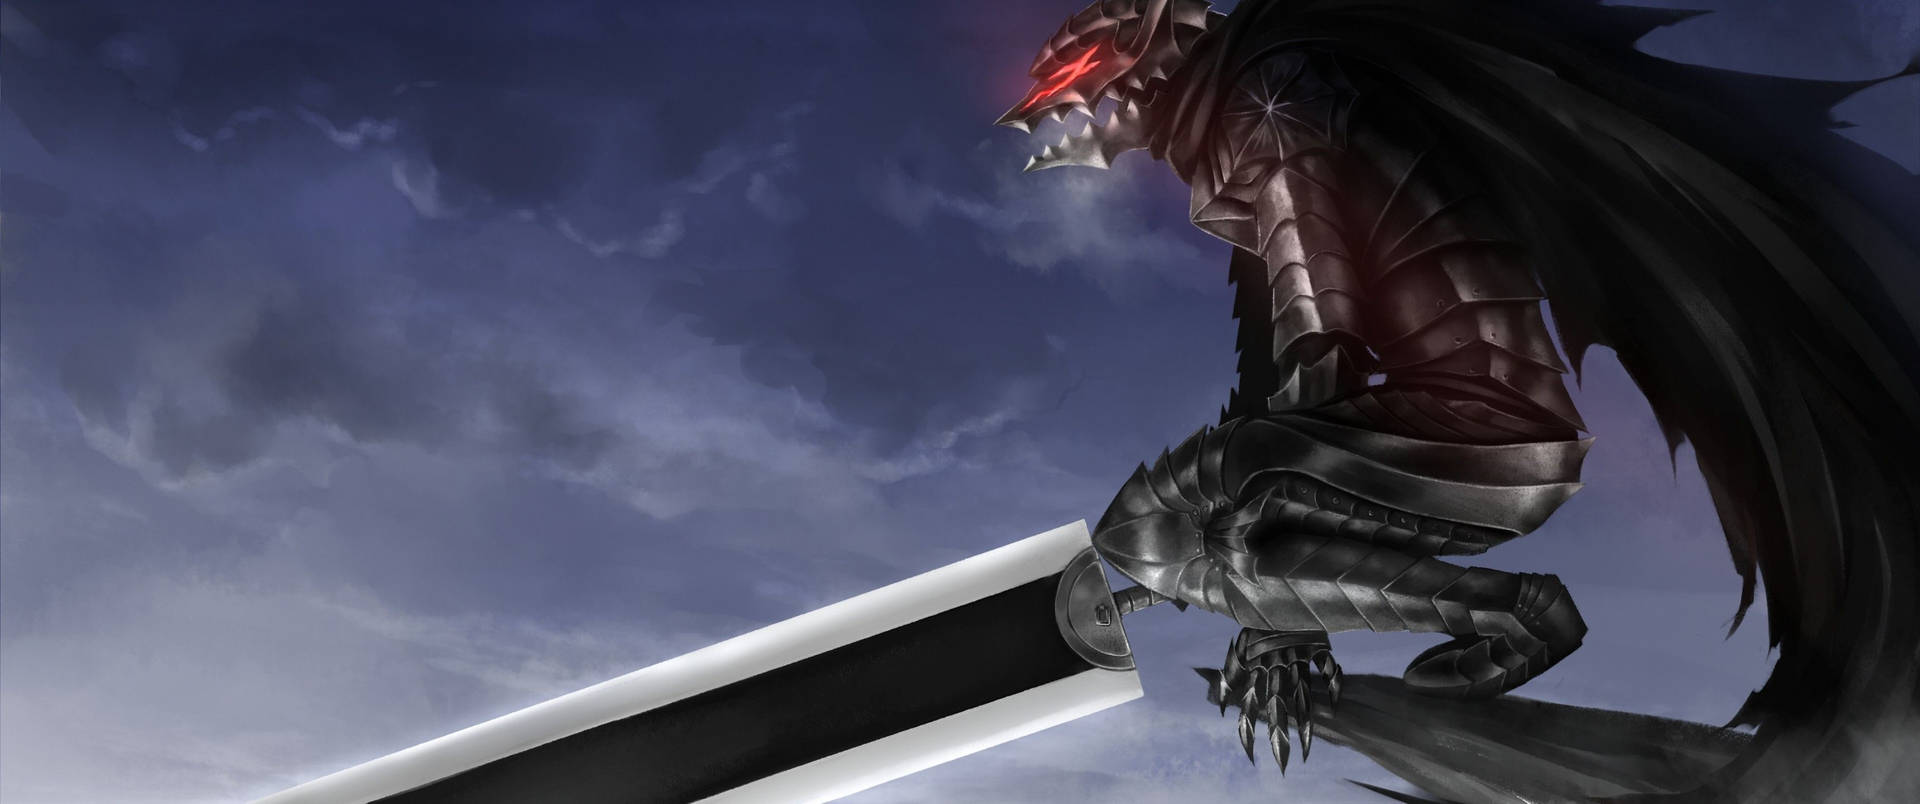 Guts faces one of his toughest battles in Berserk: Beast of Darkness Wallpaper